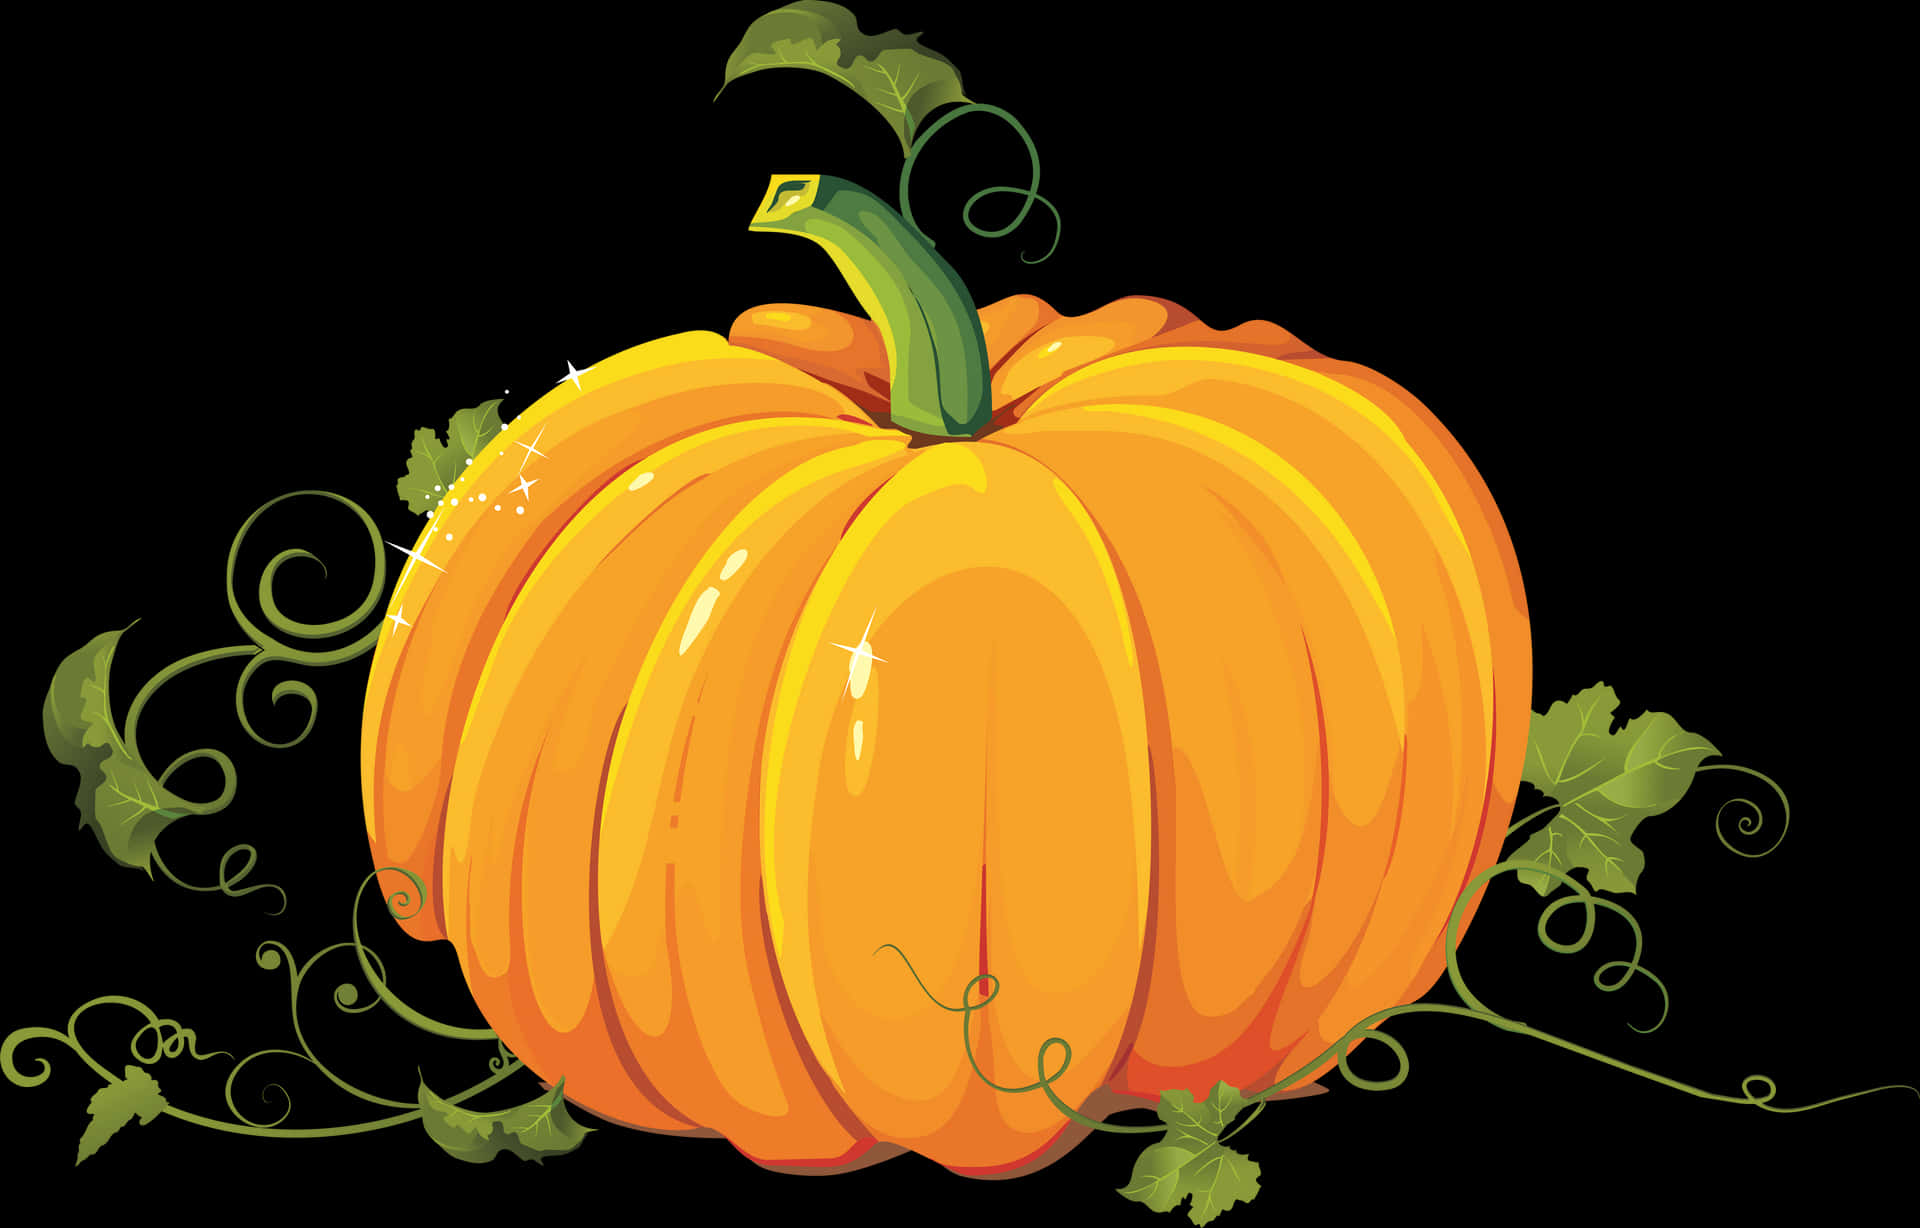 Glowing Pumpkin Illustration PNG